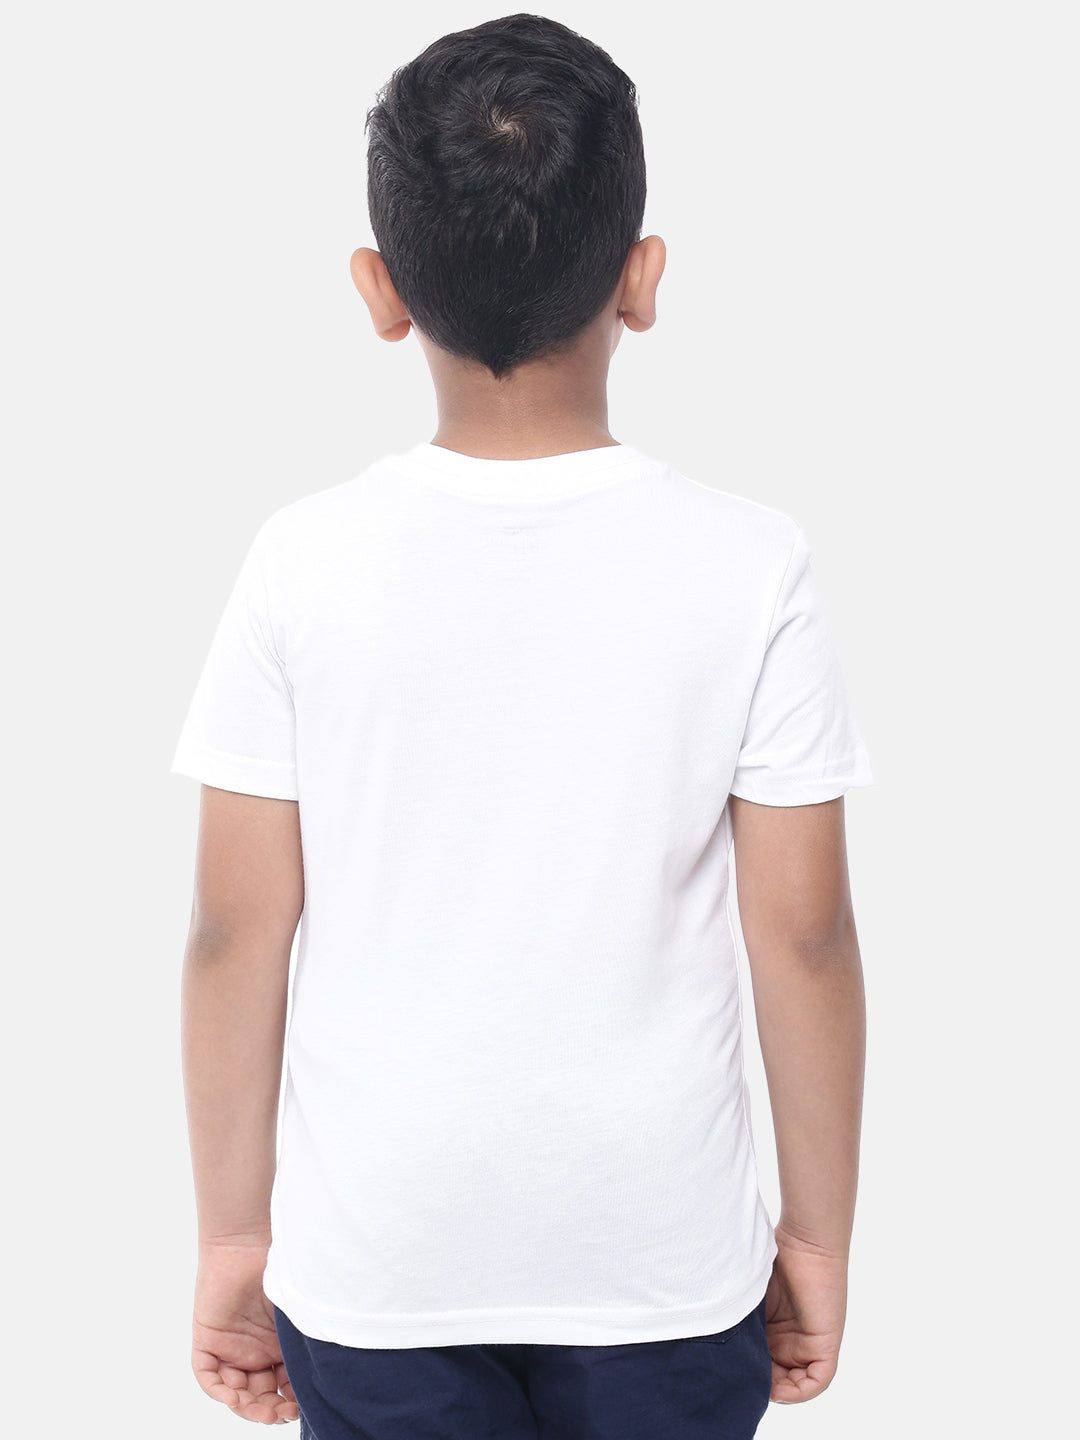 PIPIN Kids - Boys Half Sleeve - Basic crew neck Printed T-Shirt Cotton White - De Moza (6682127204415)